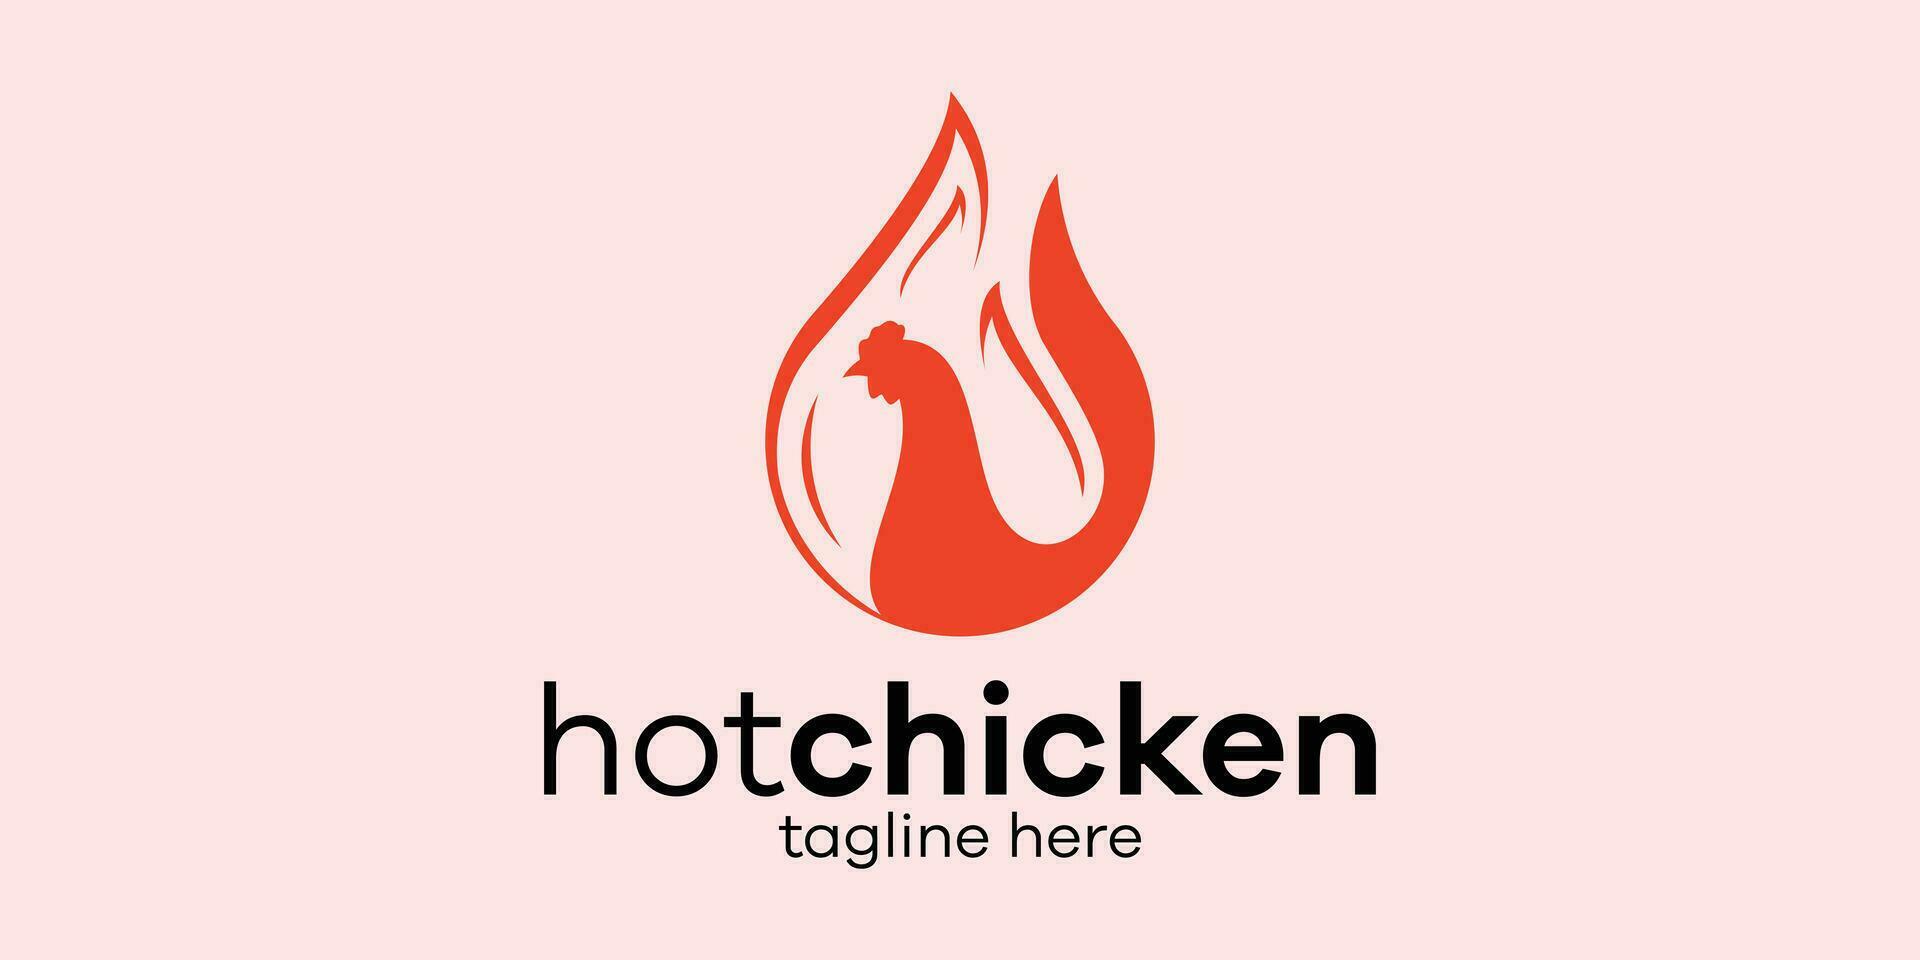 logo design chicken and fire icon vector inspiration